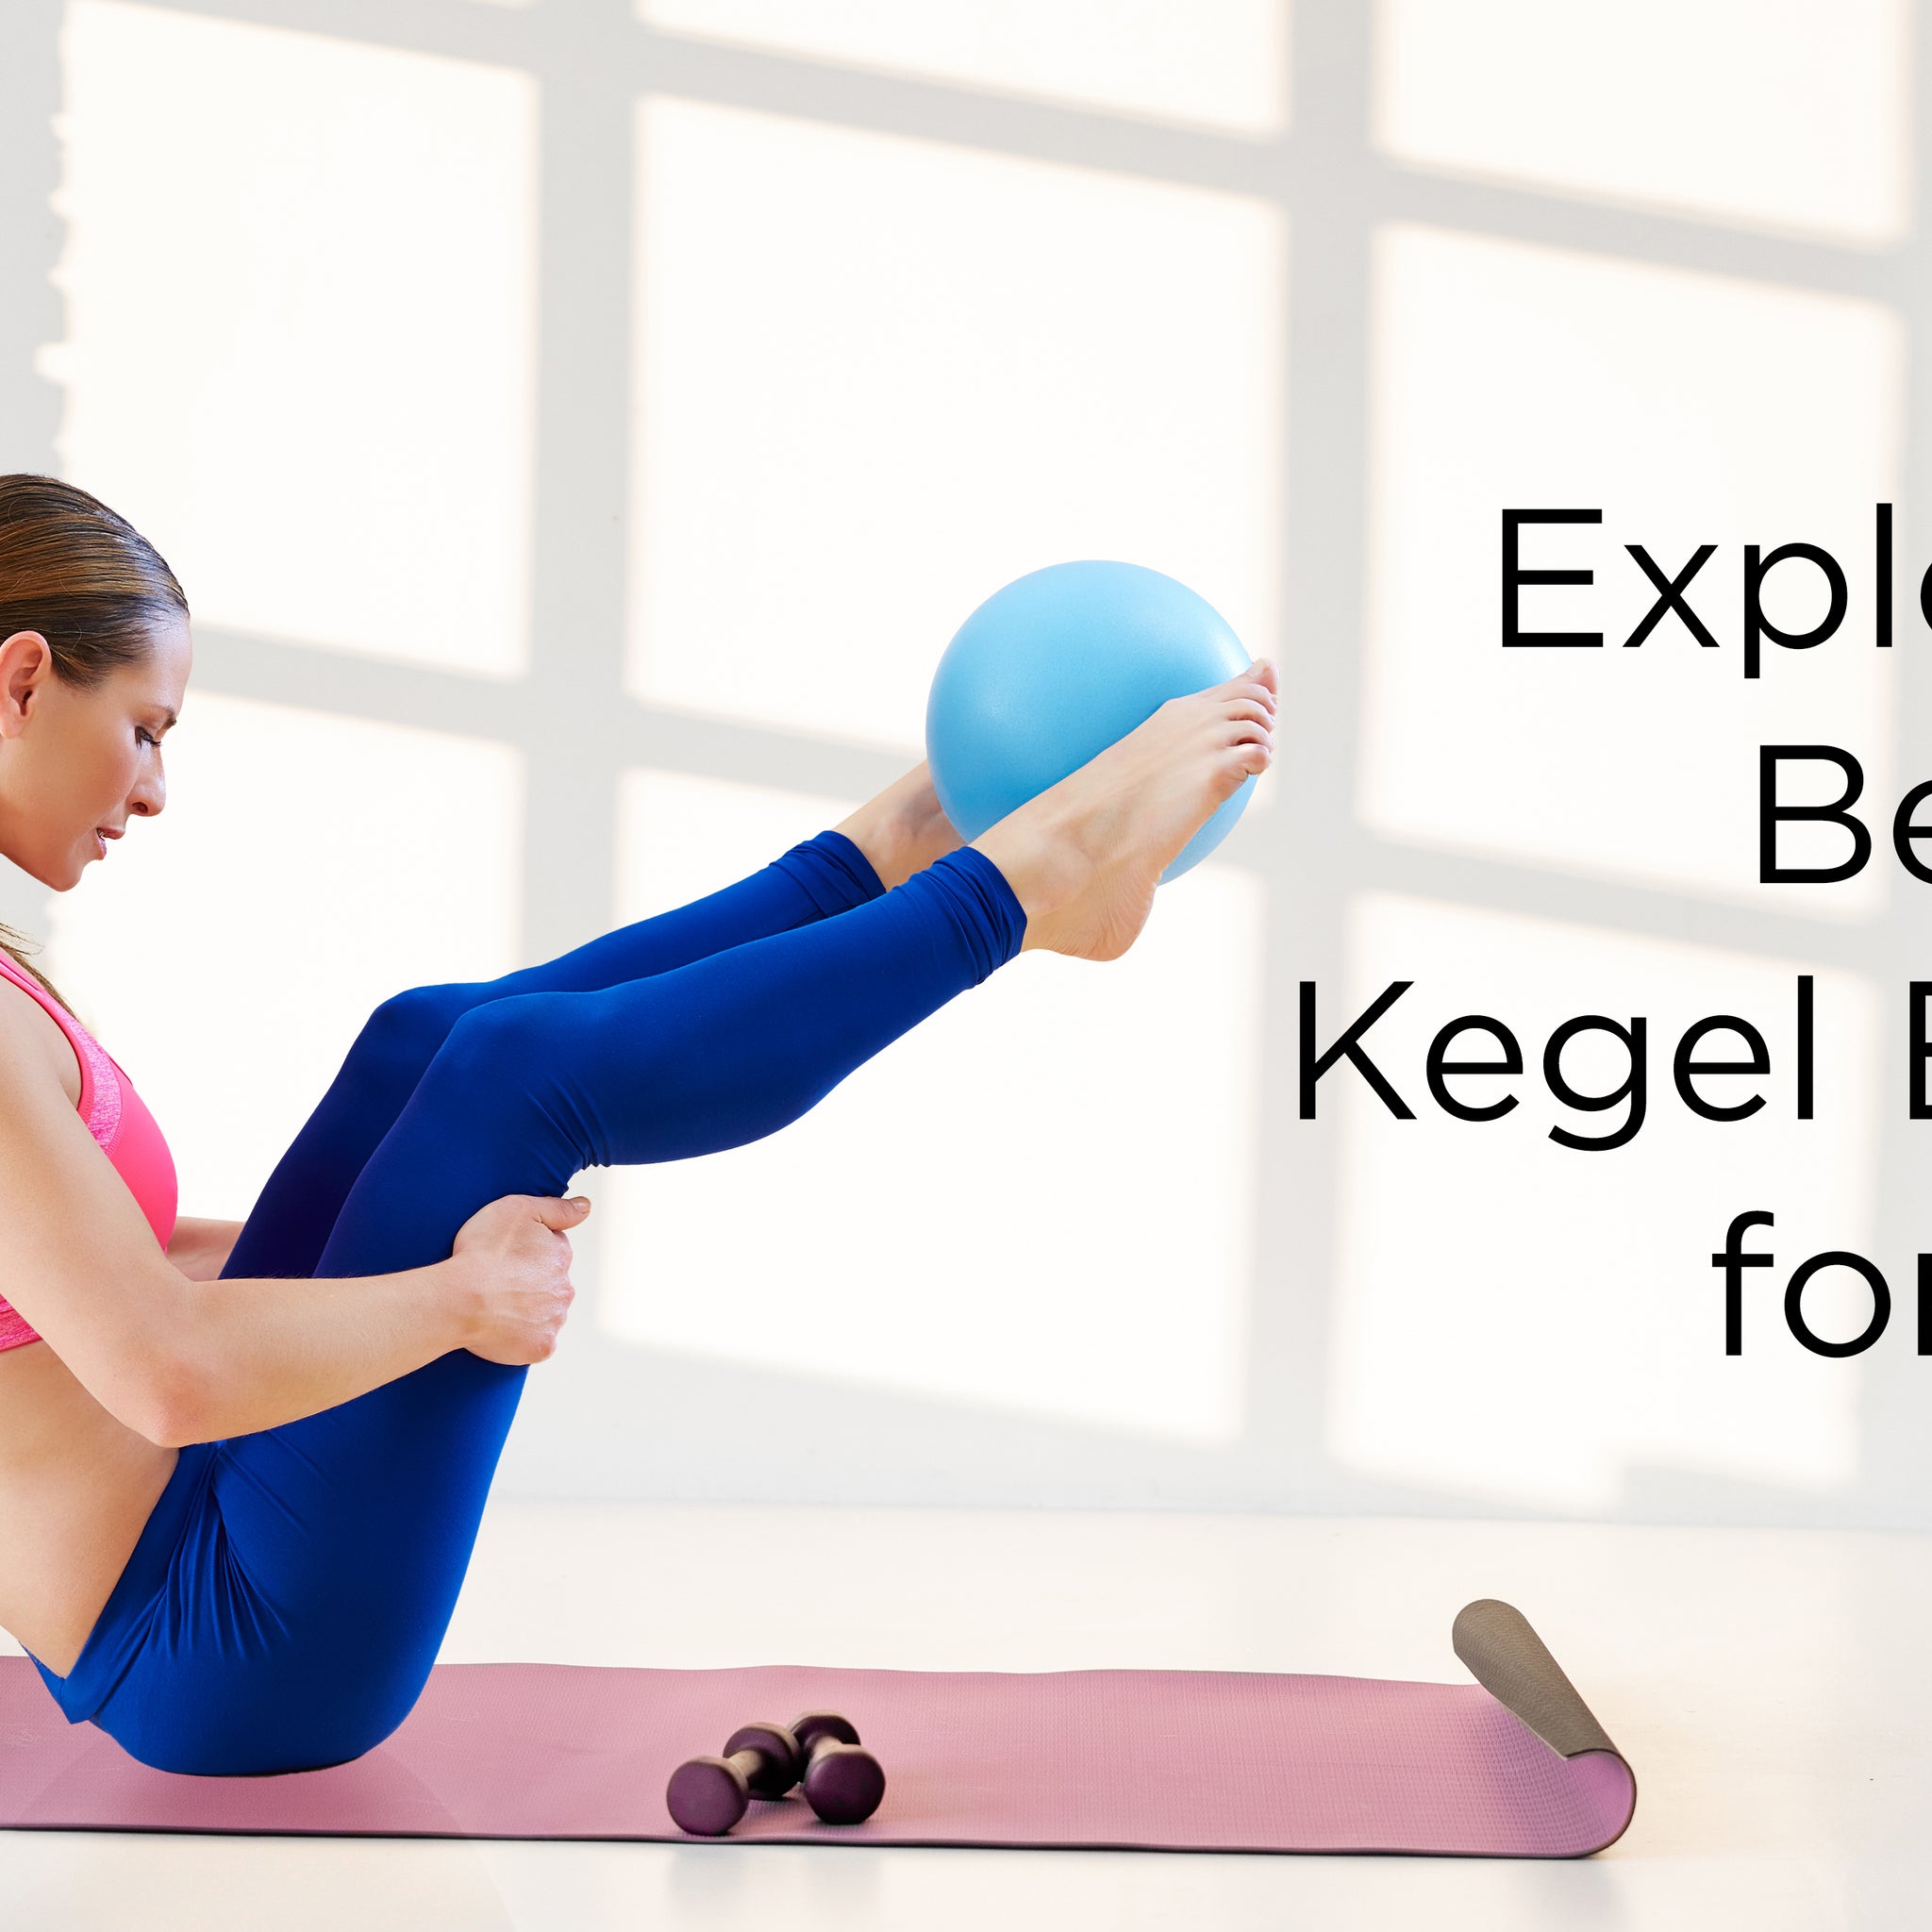 Exploring The Benefits Of Kegel Exercises For Women